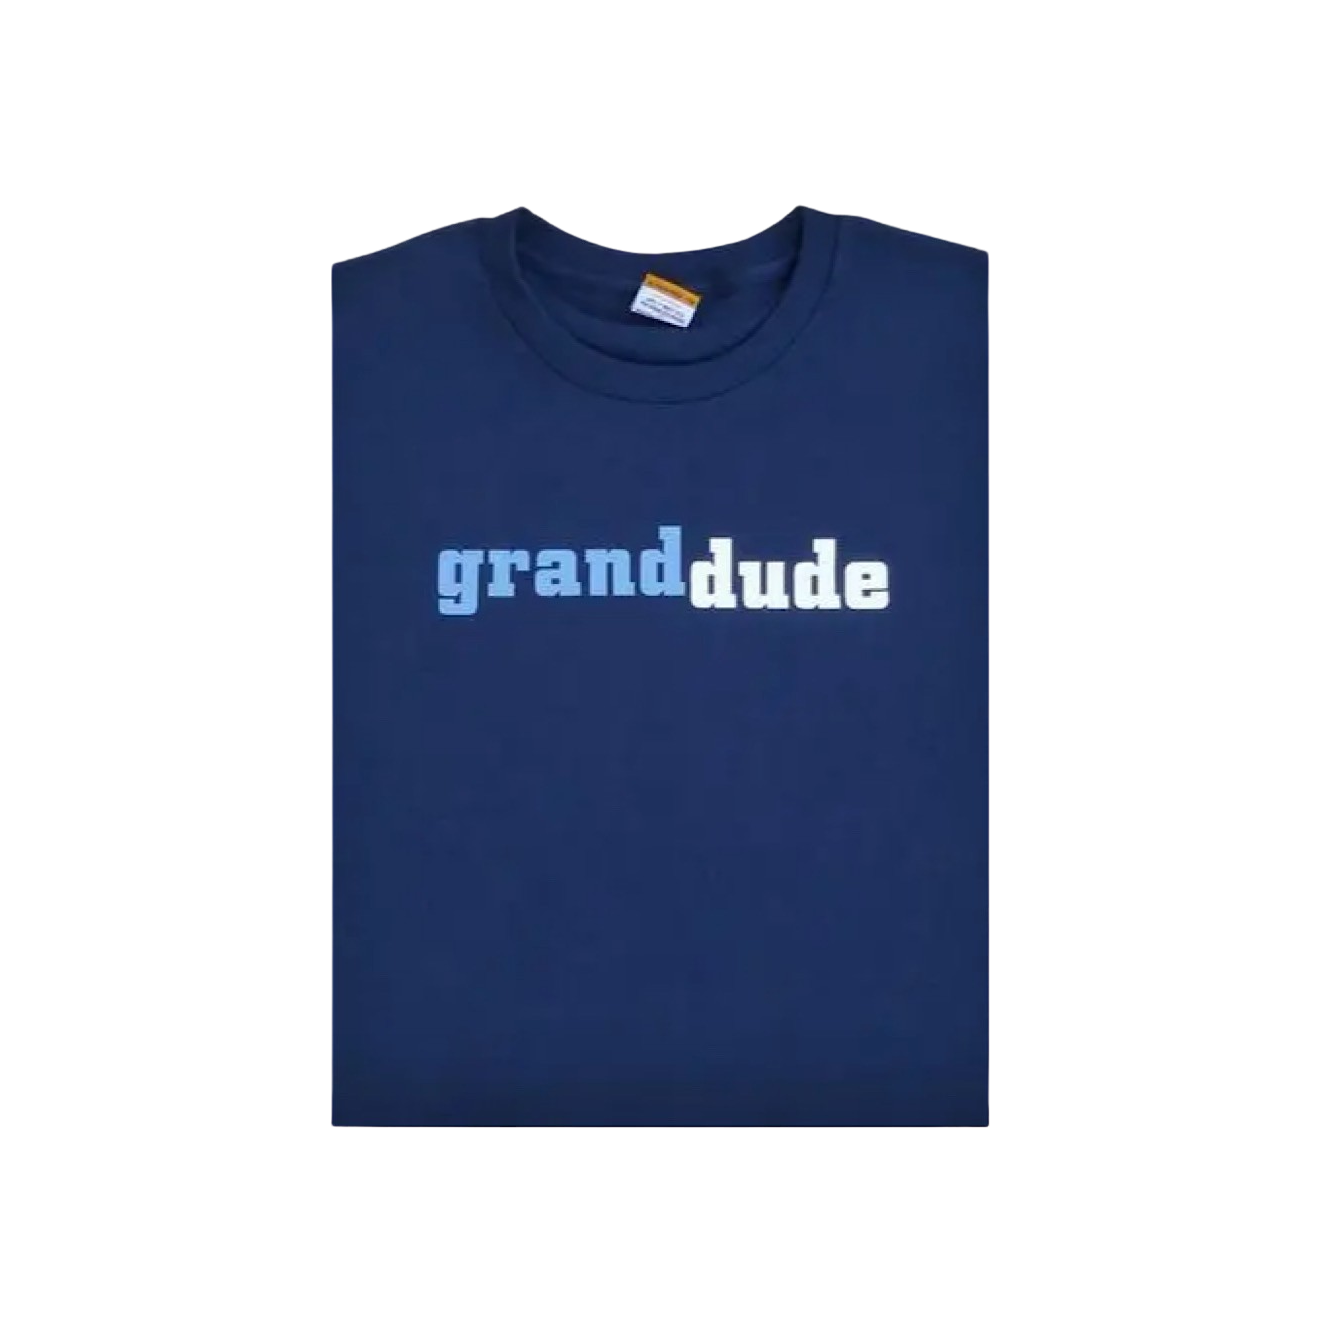 Granddude T-Shirt